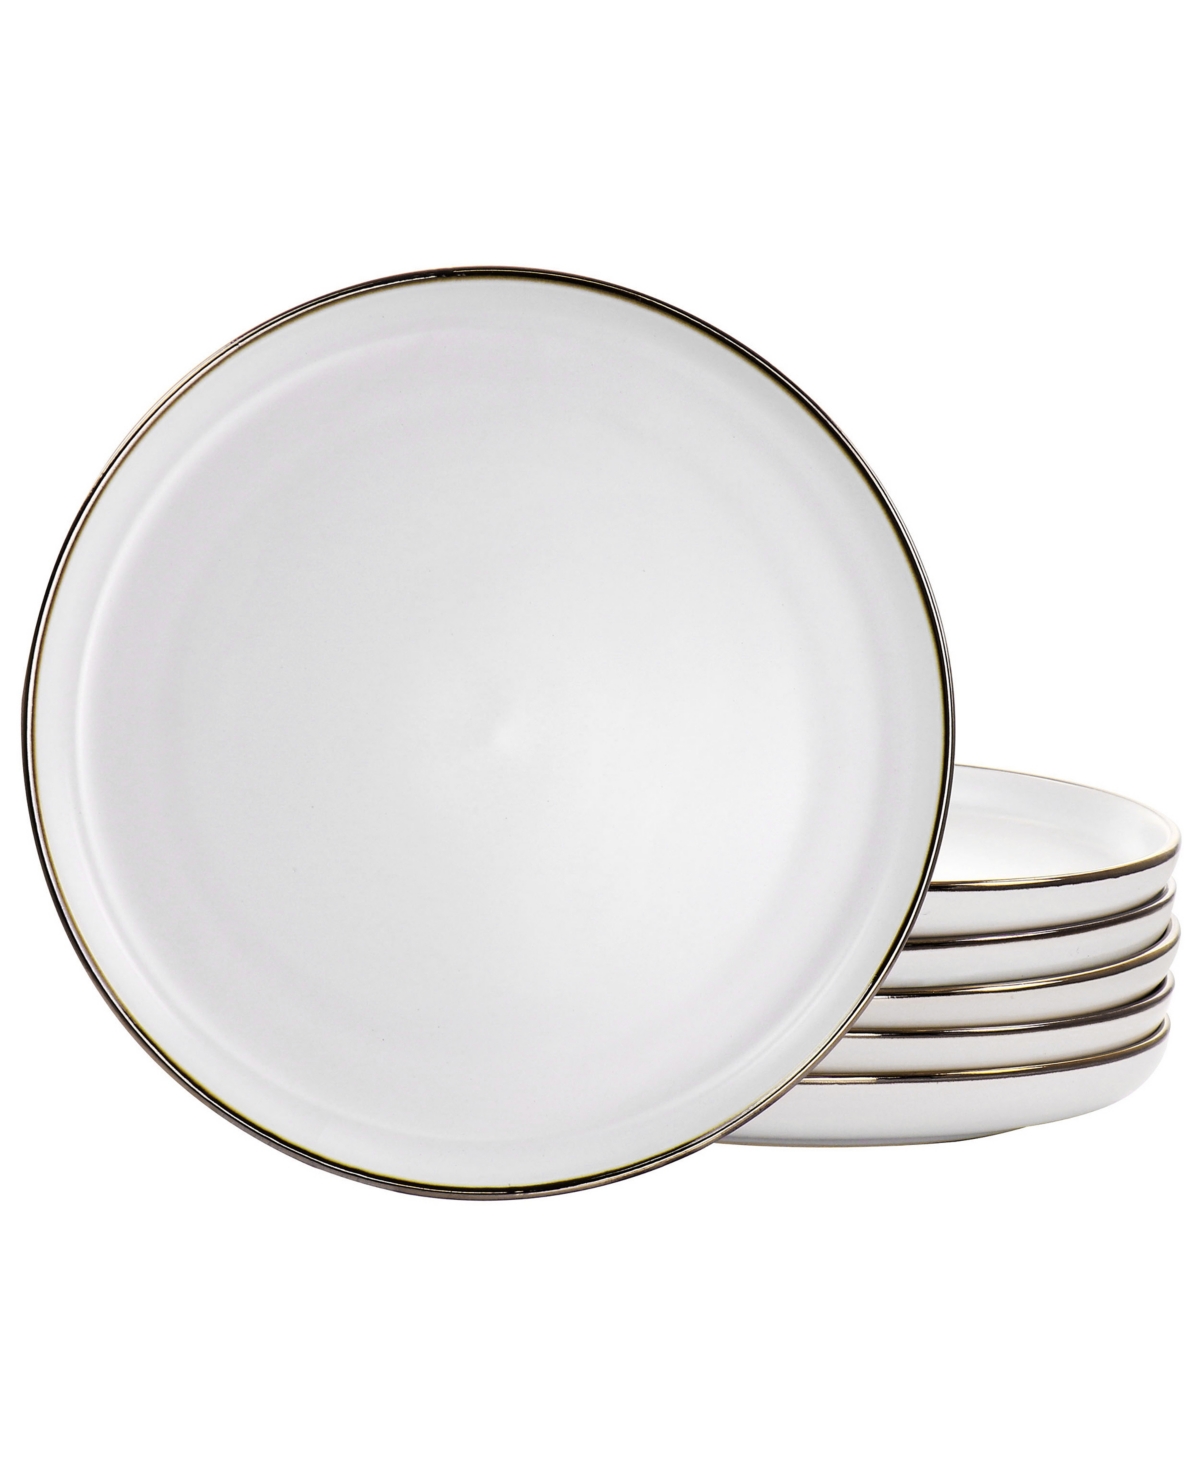 Flat, Raised Rim, Alejandro 6 Piece Stoneware Dinner Plate Set, Service for 6 - Matte White with Gold-Tone Rim